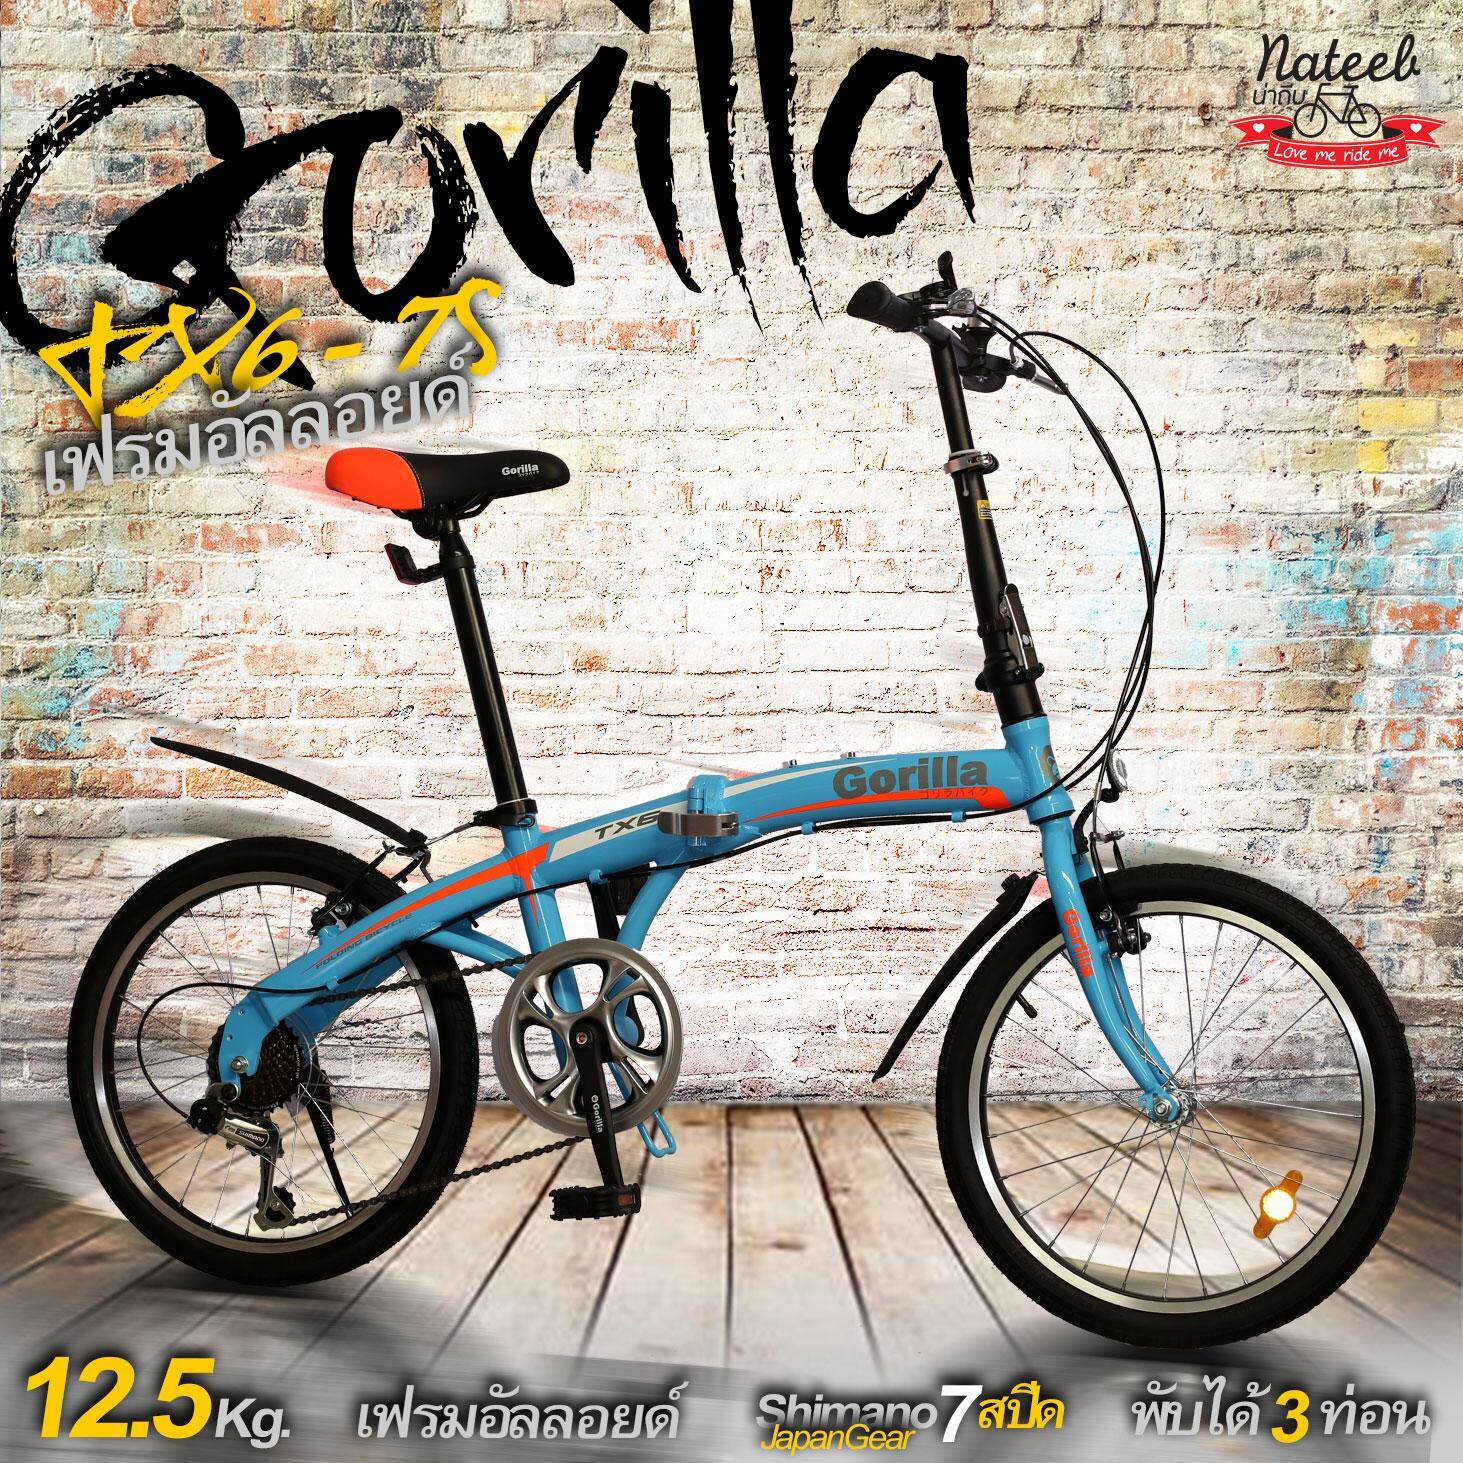 GorillaTX6 7SPจักรยานพับได้เฟรมอัลลอยหนัก12.5Kg nateebbike